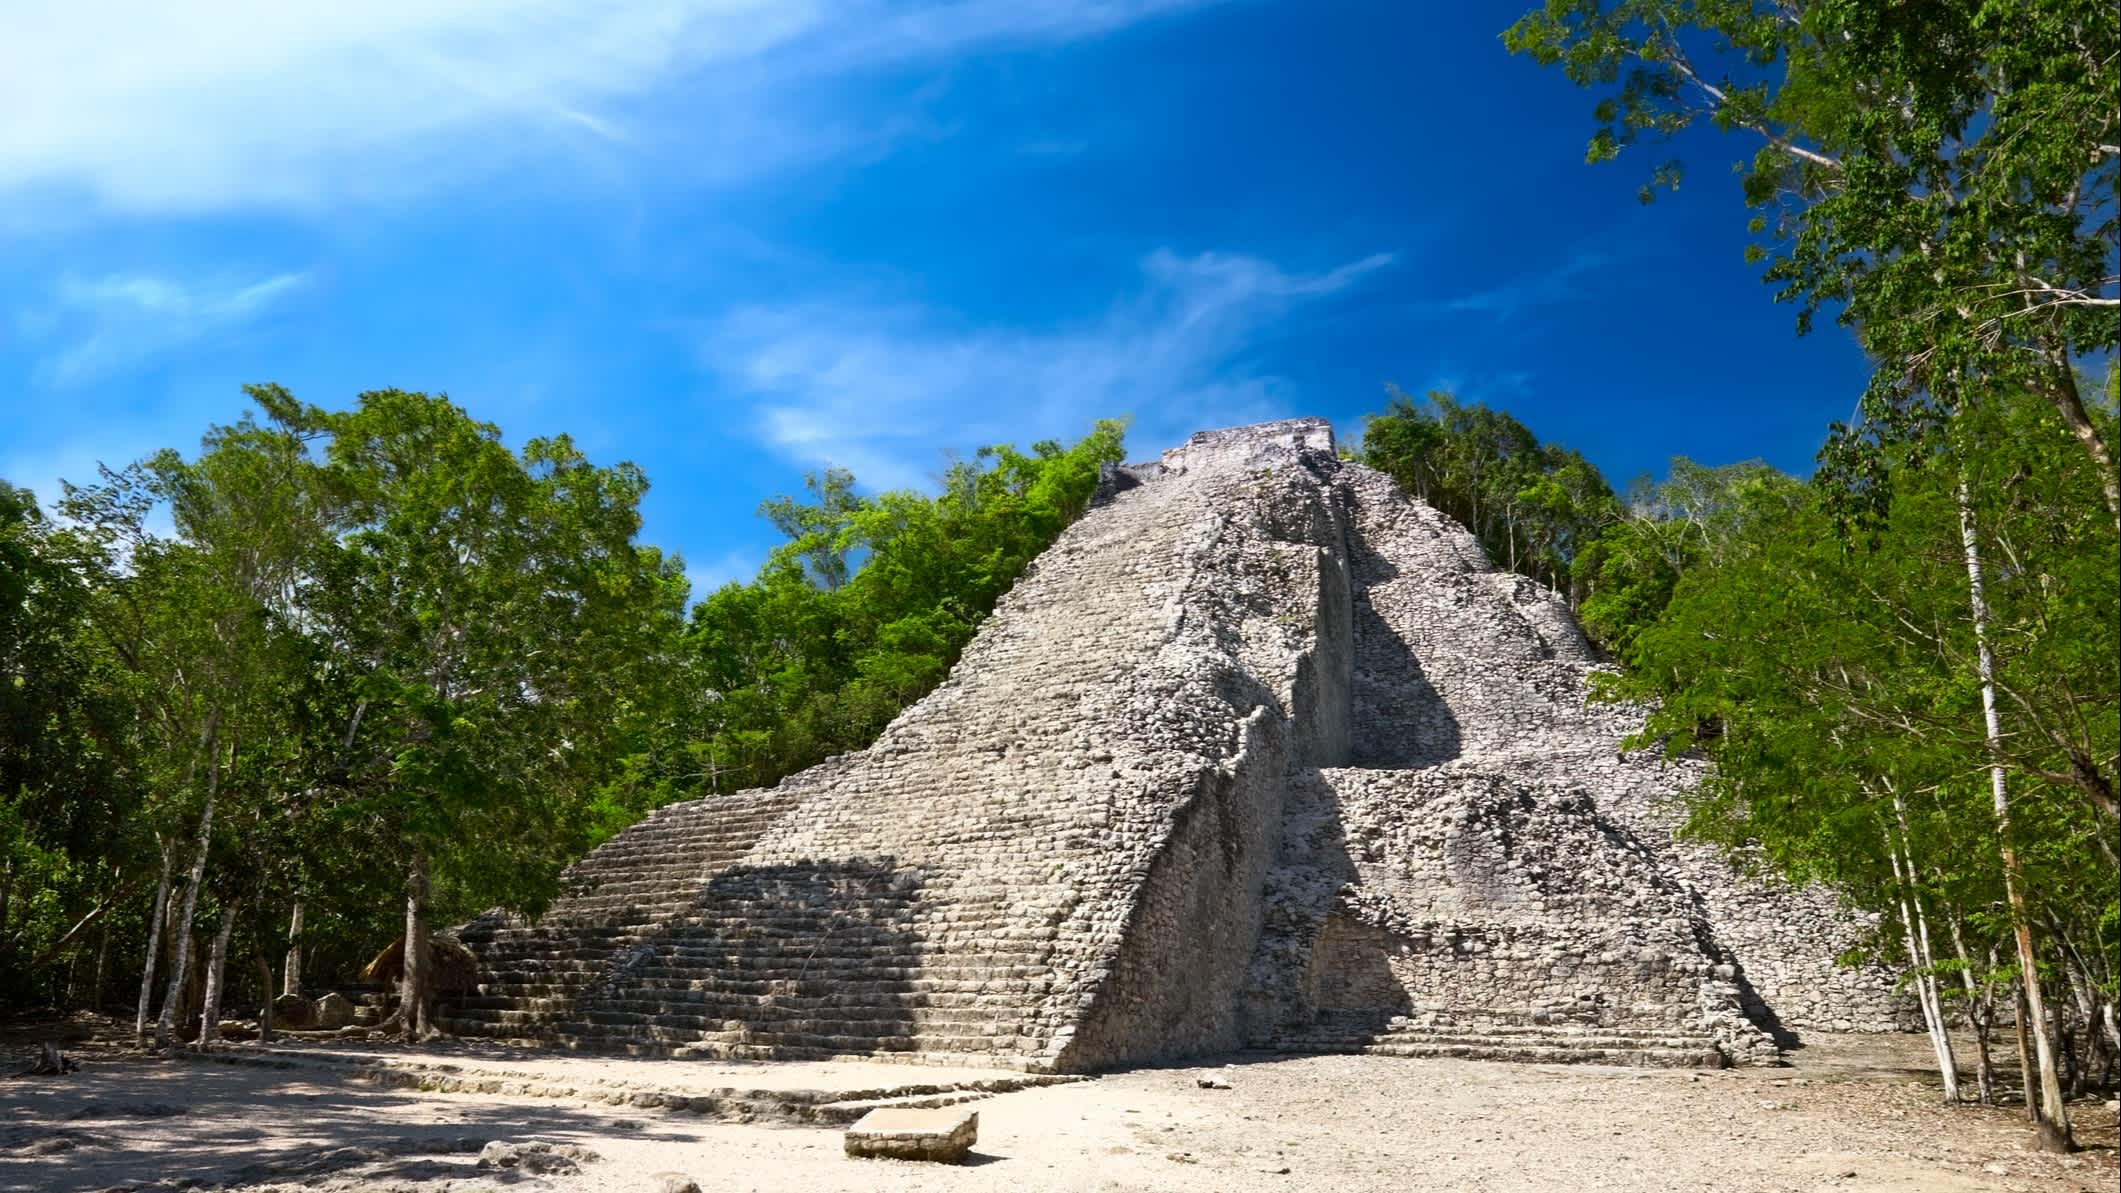 Vue de la pyramide maya Nohoch Mul à Coba, au Yucatán, au Mexique.

